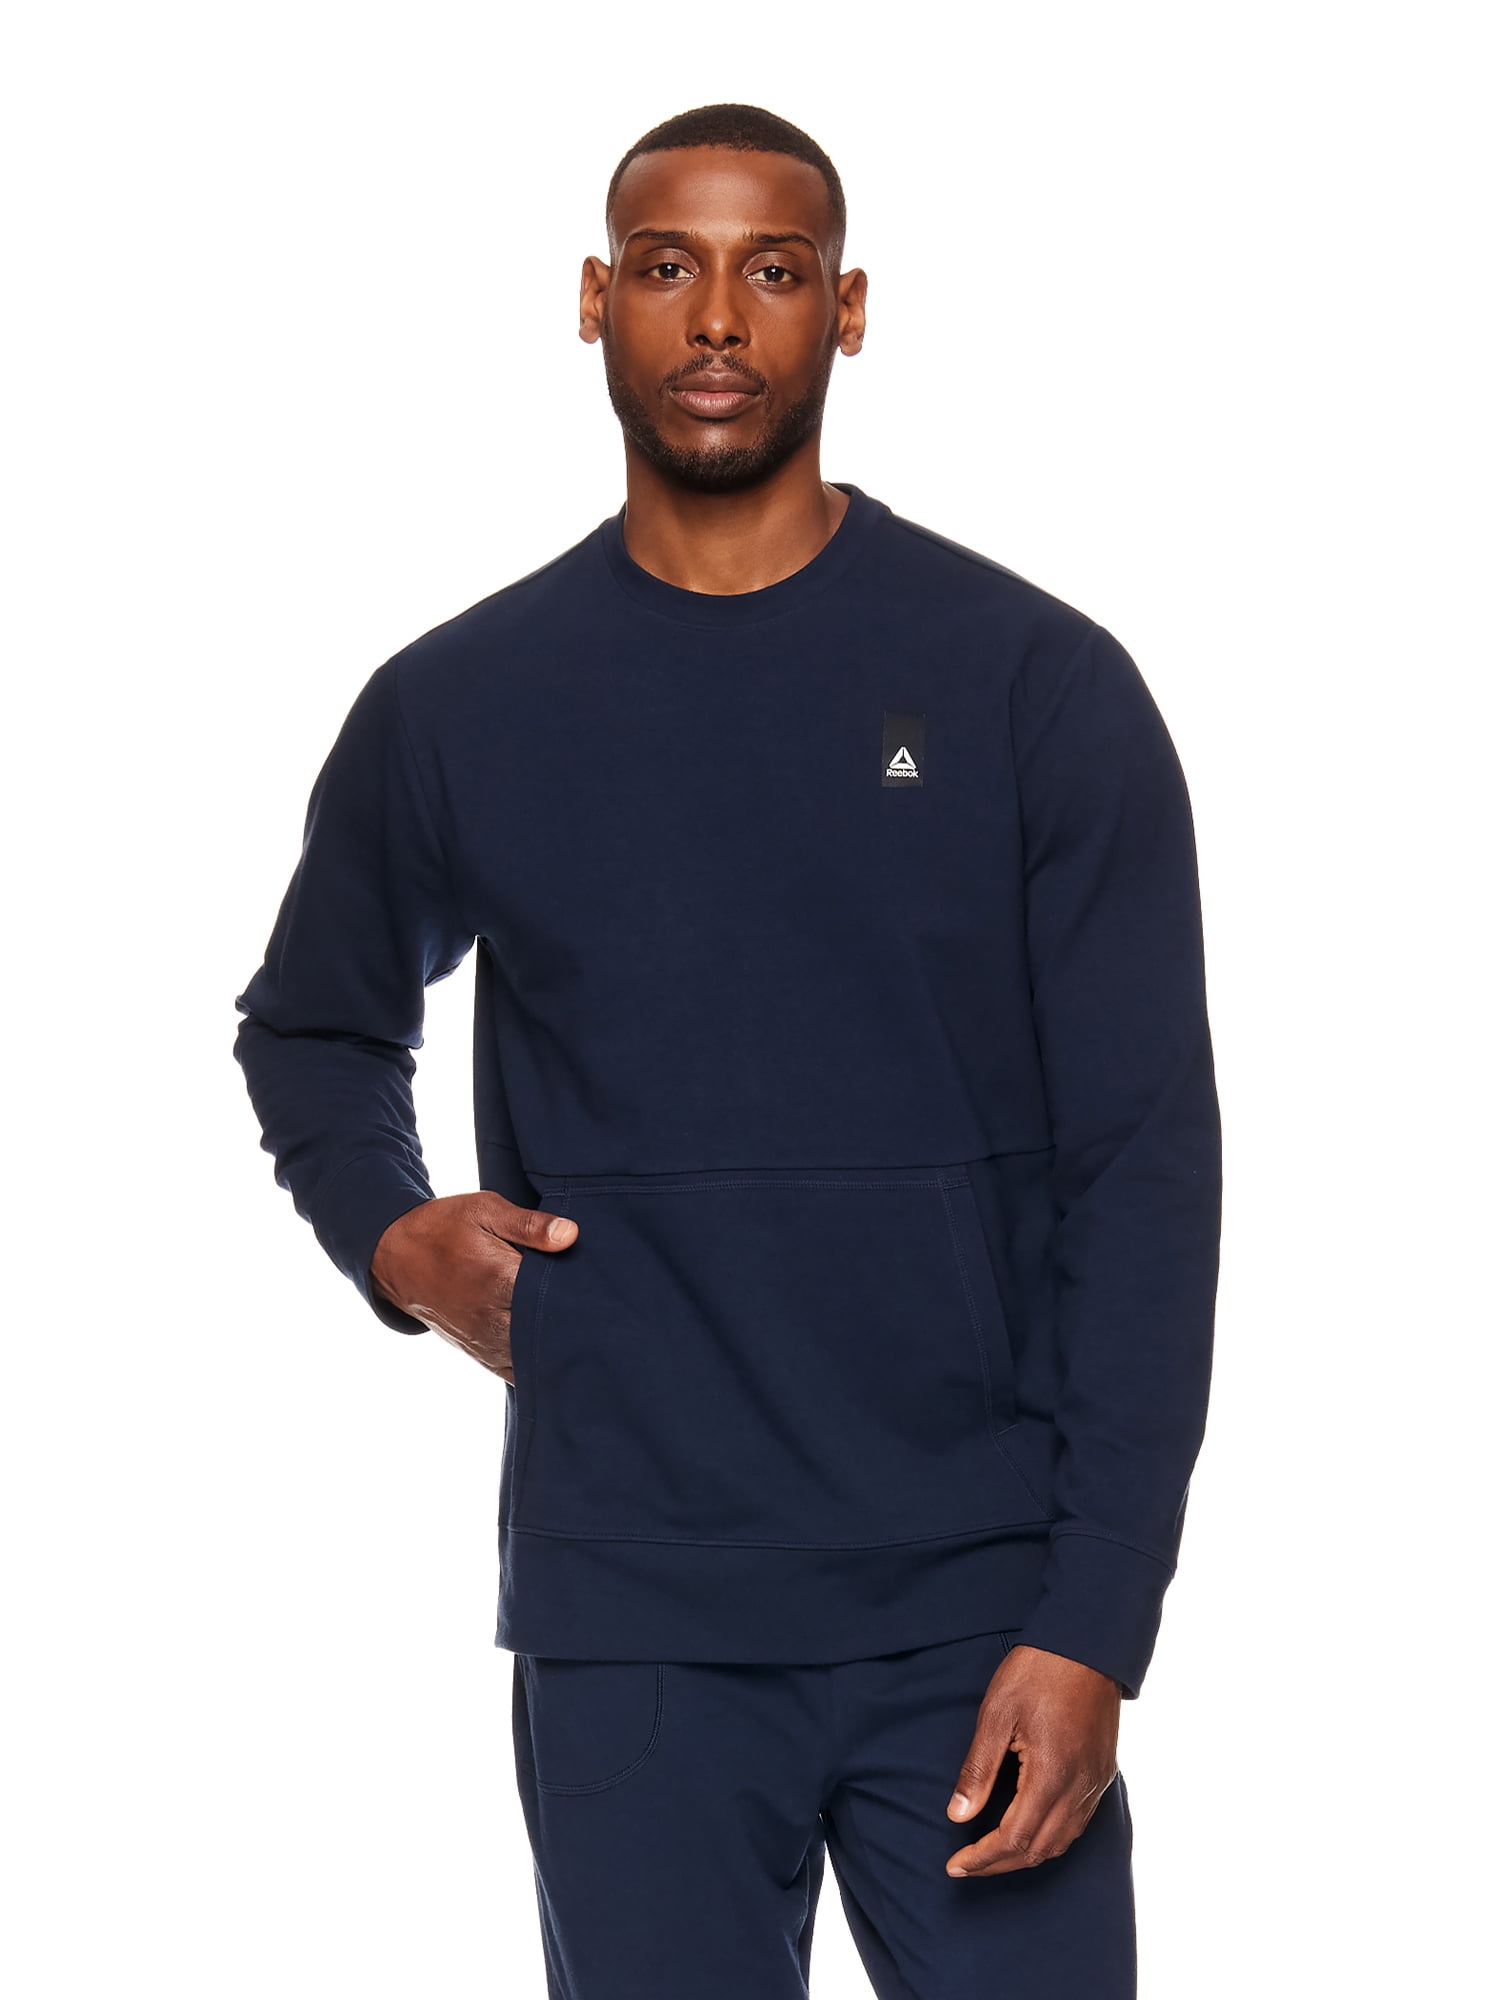 Reebok Men's Fundamental Crewneck Sweatshirt, up to Size 3XL 